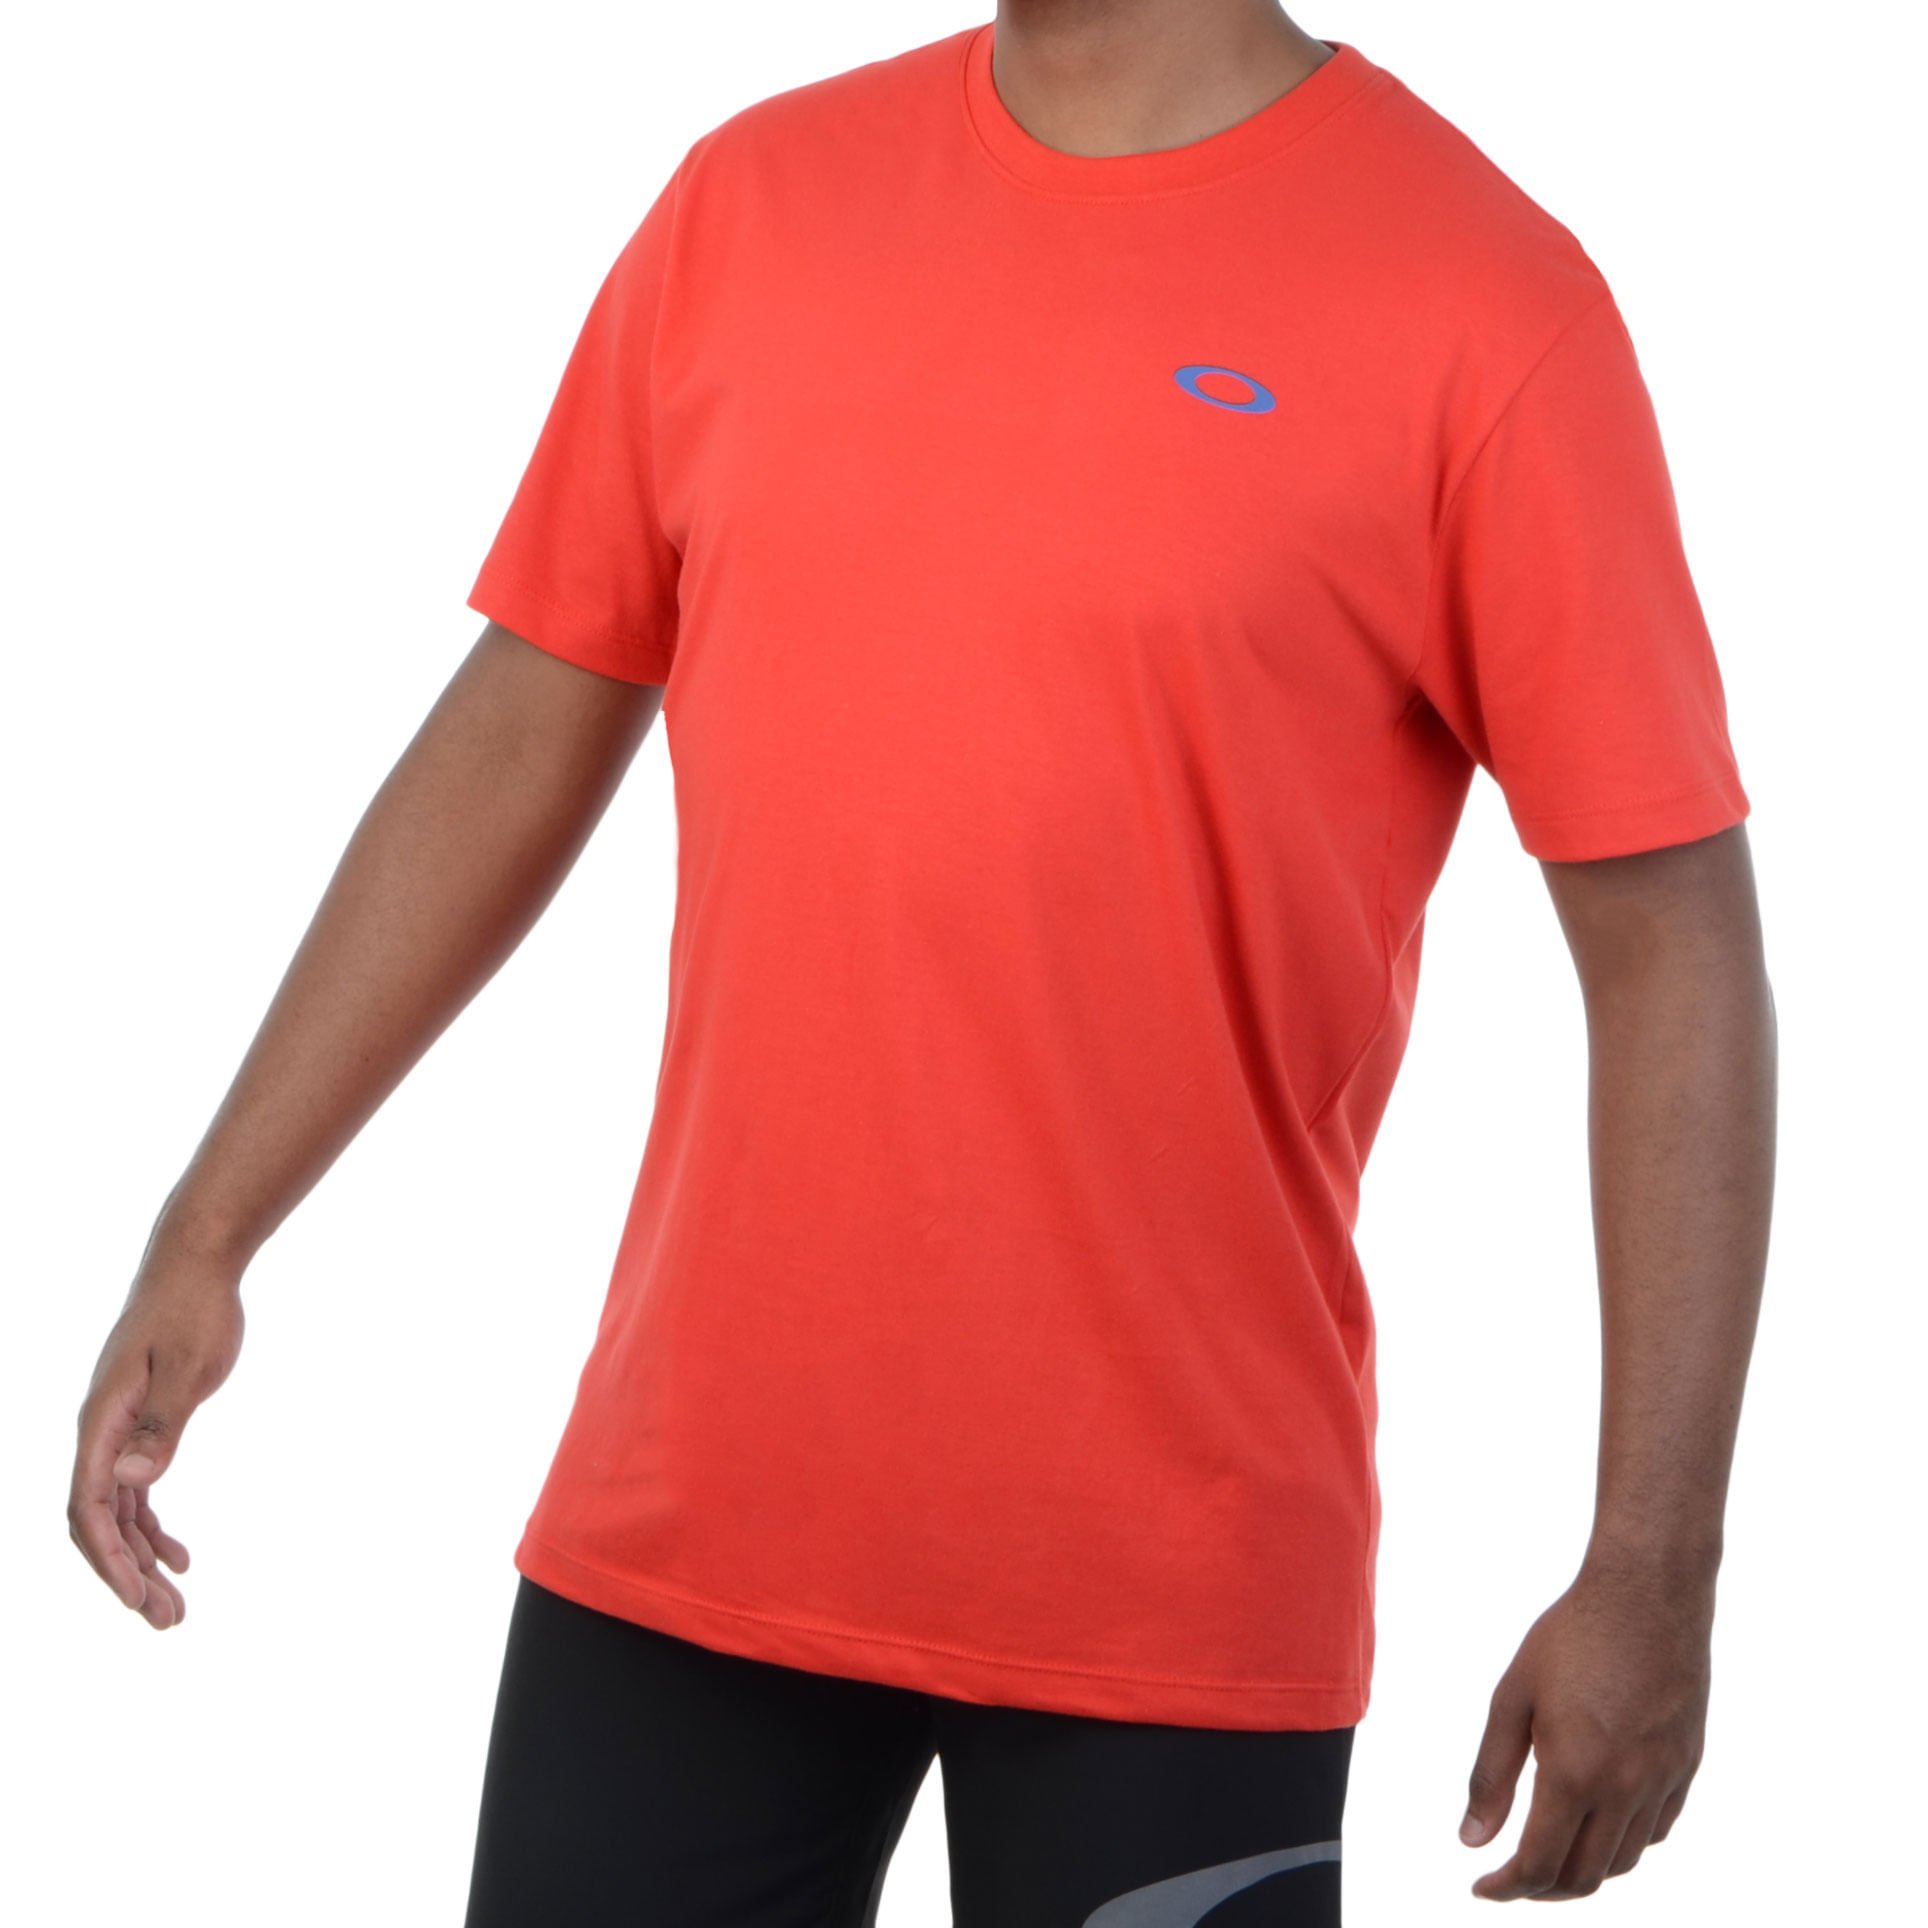 Camiseta Oakley Running Miles Vermelha - Compre Agora